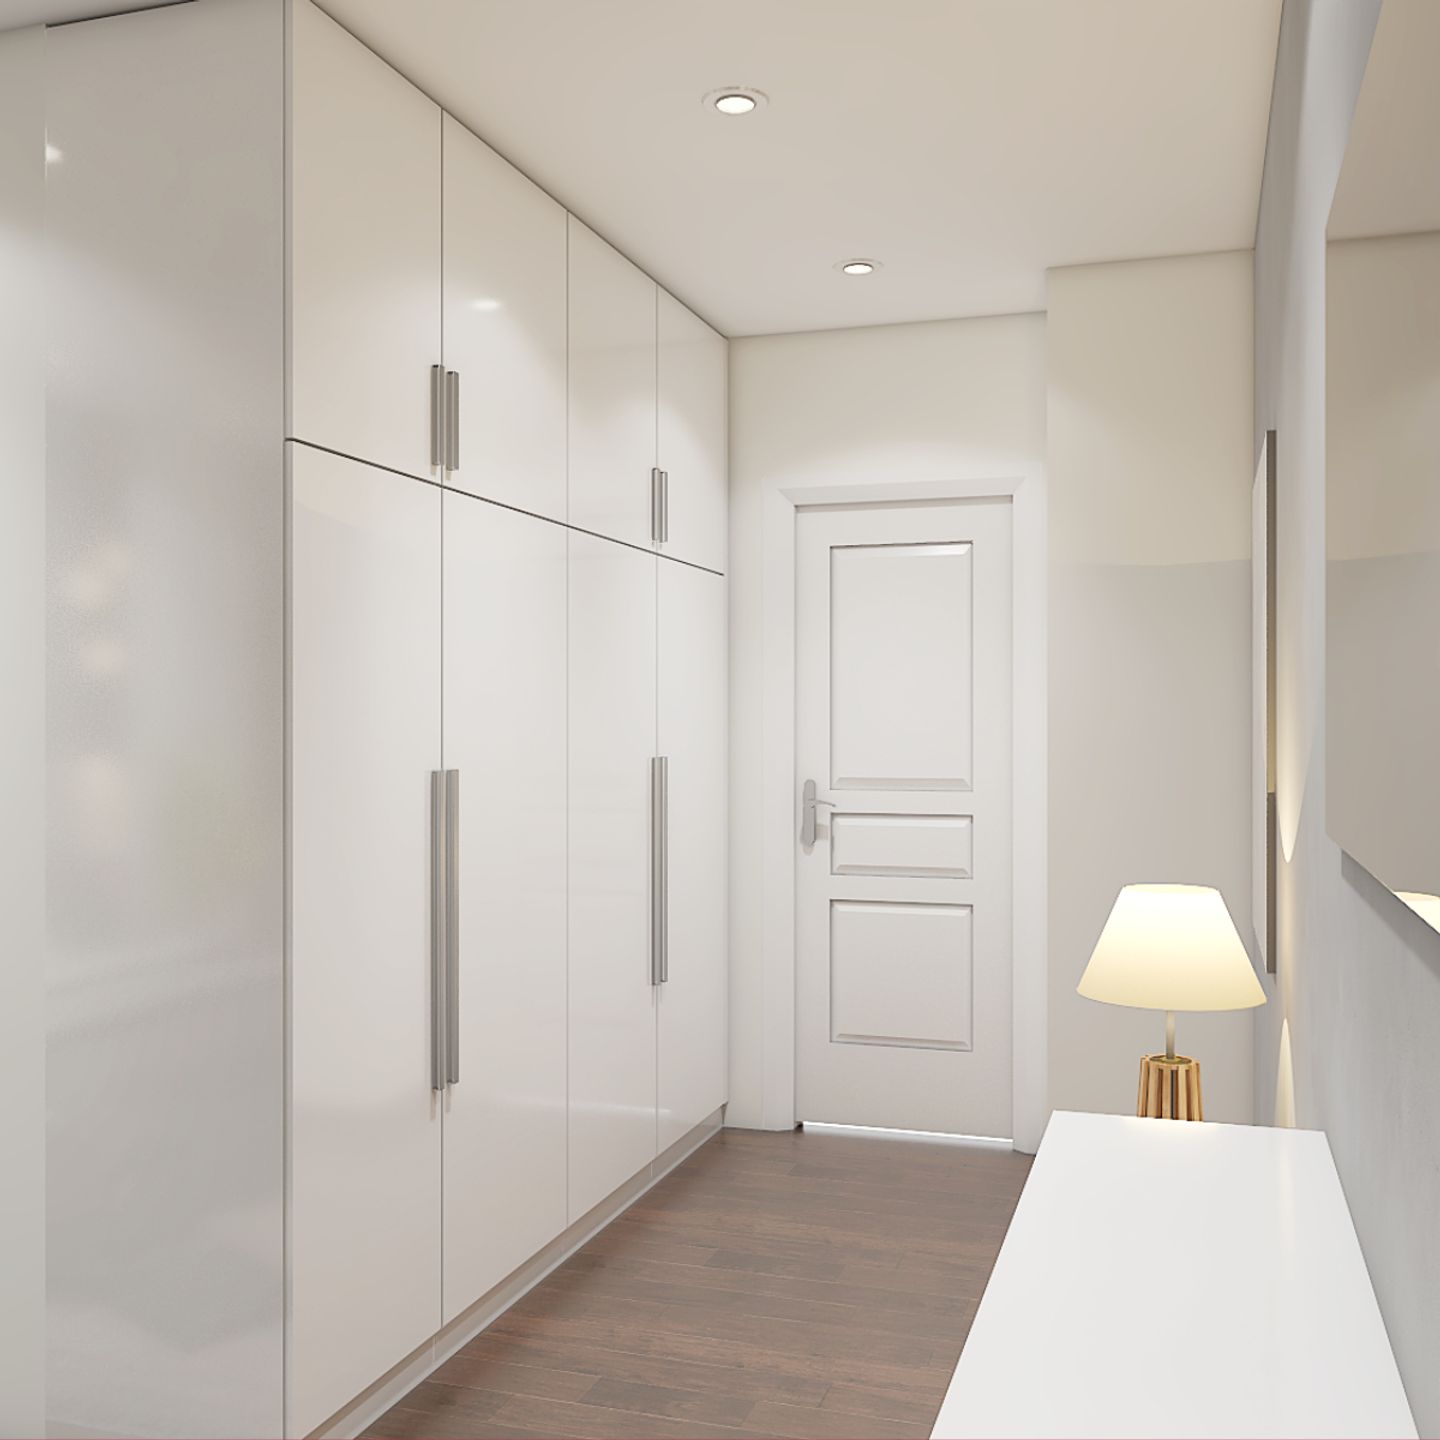 4-Door White Swing Wardrobe Design - Livspace